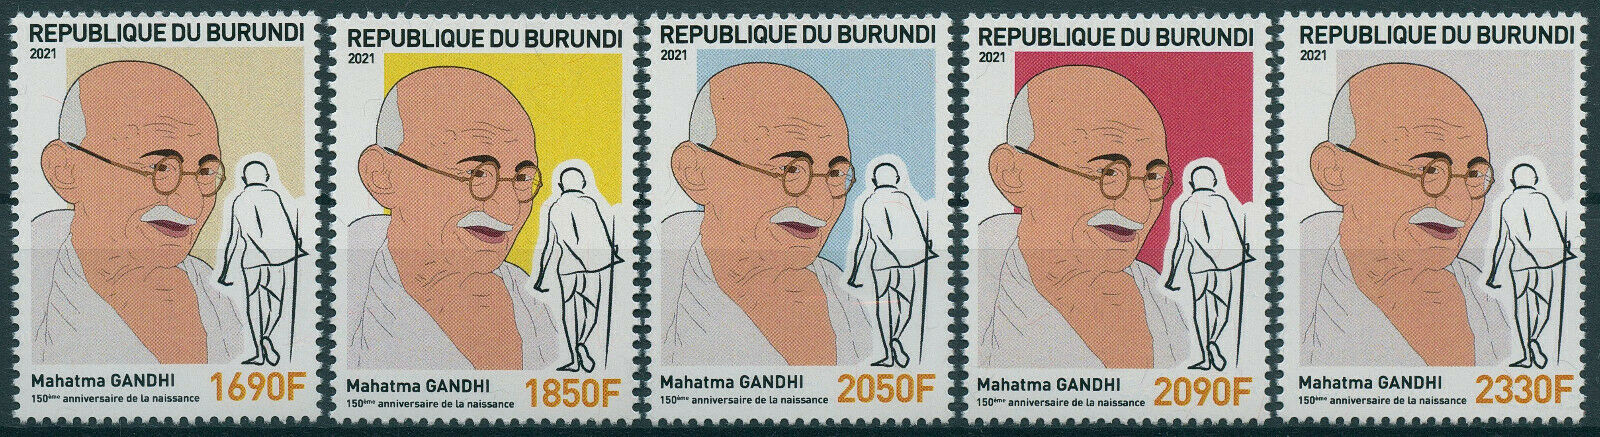 Burundi 2021 MNH Mahatma Gandhi Stamps Historical Figures People 5v Set